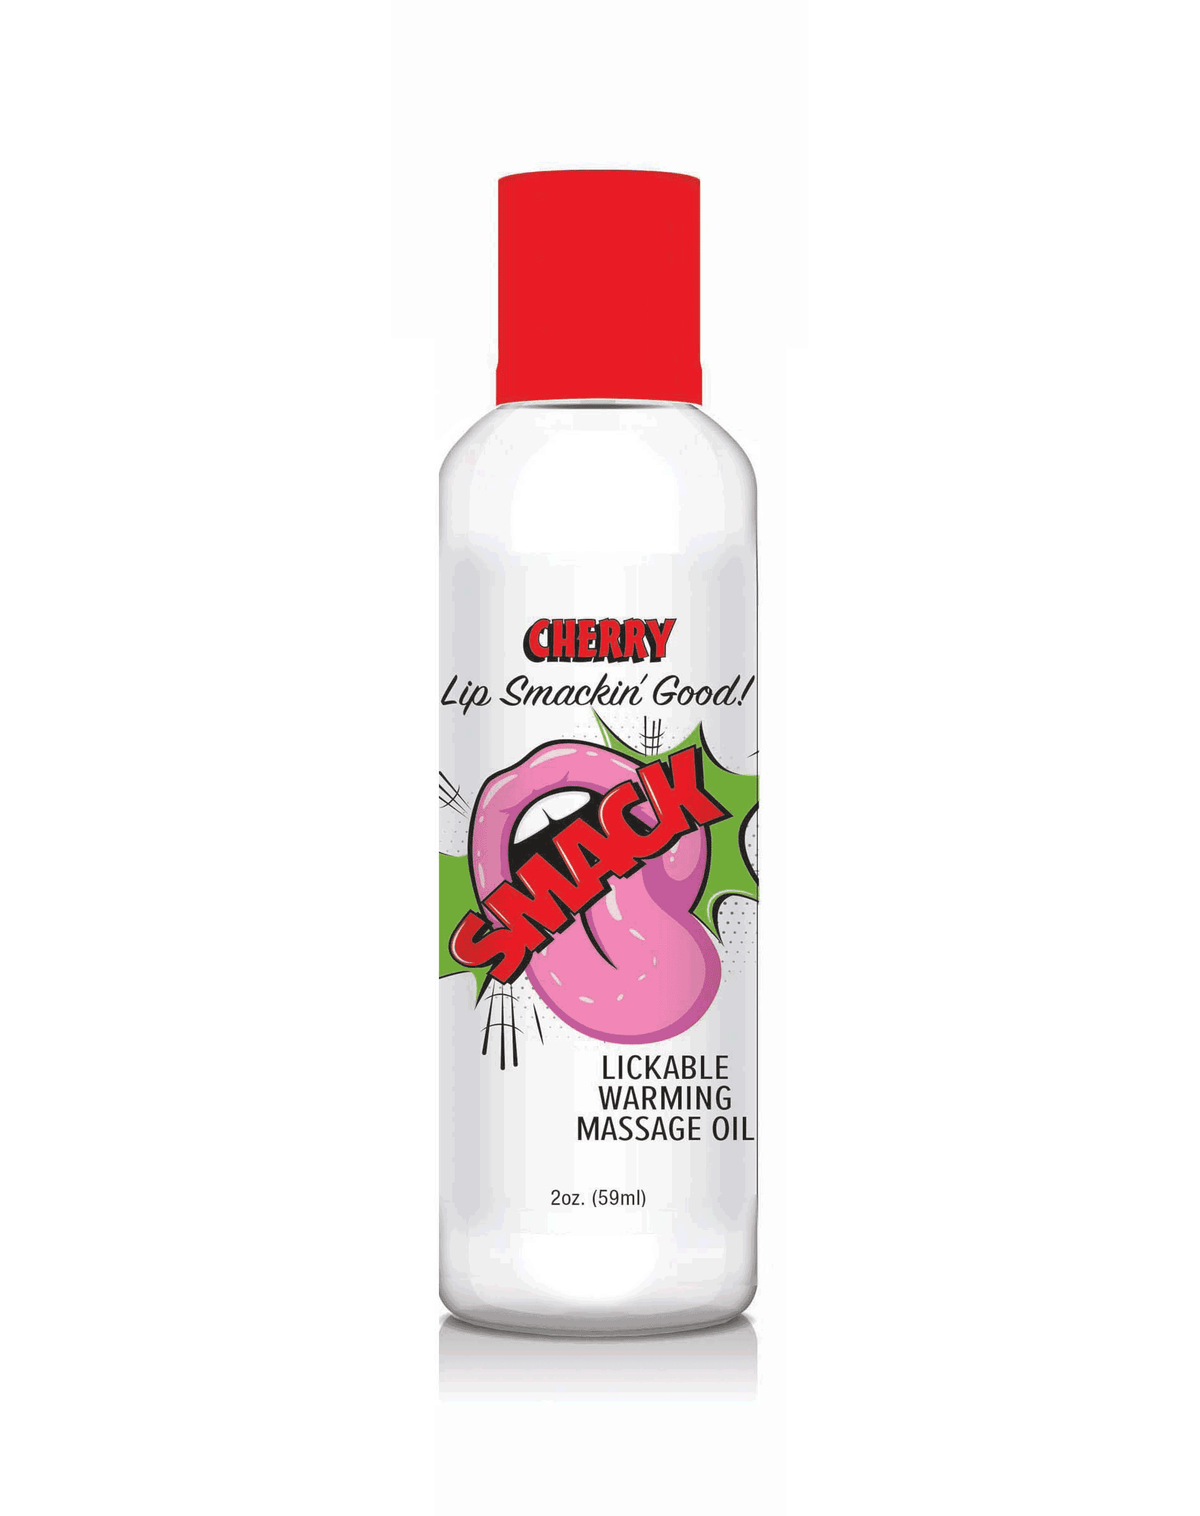 Smack Warming & Lickable Massage Oil – Cherry